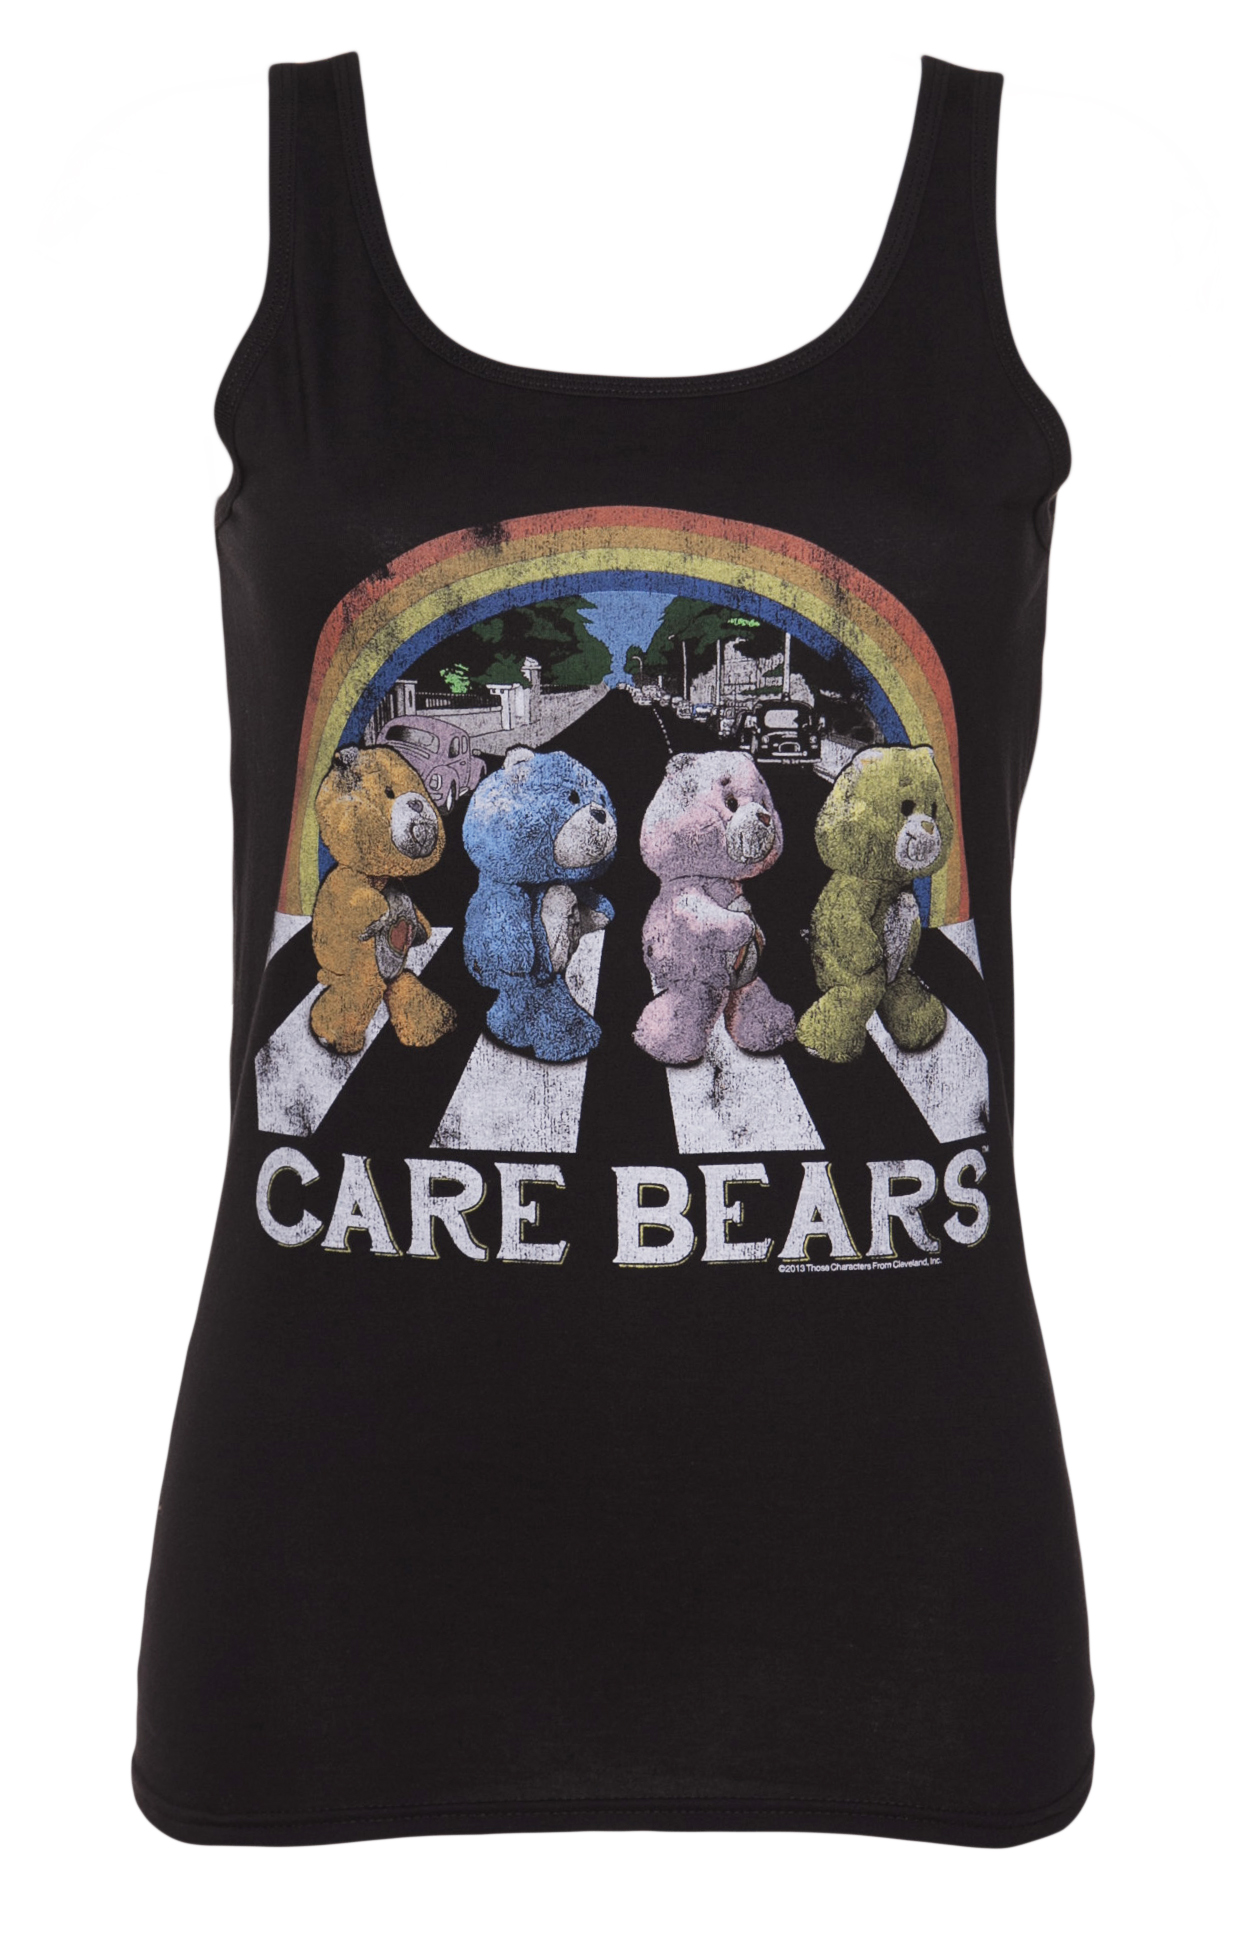 Ladies Care Bears Abbey Road Vest